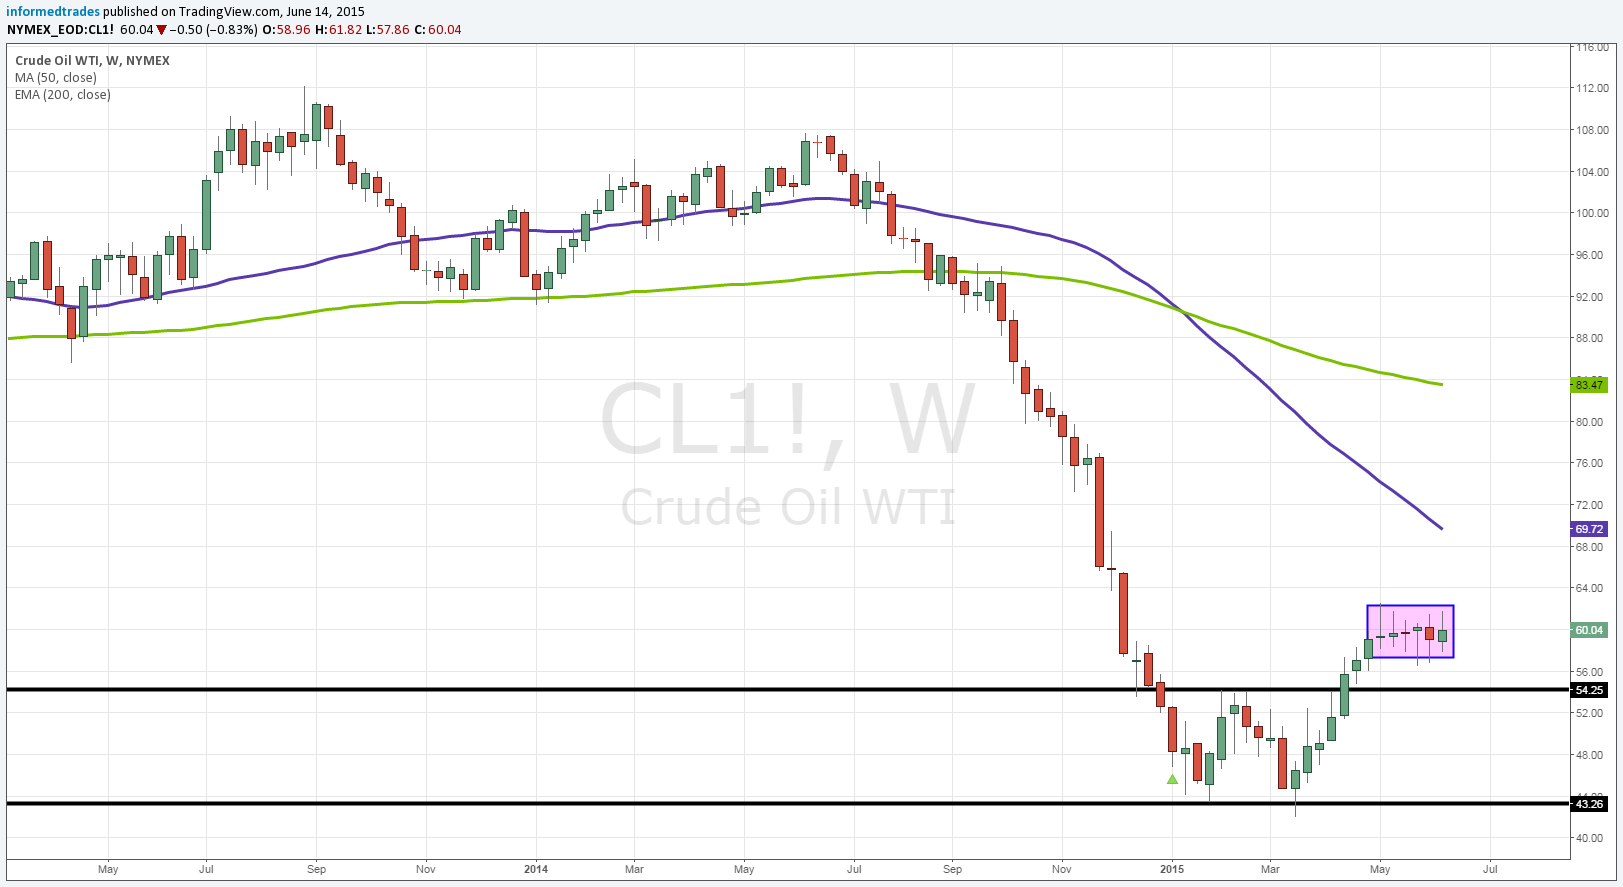 Crude Oil Weekly